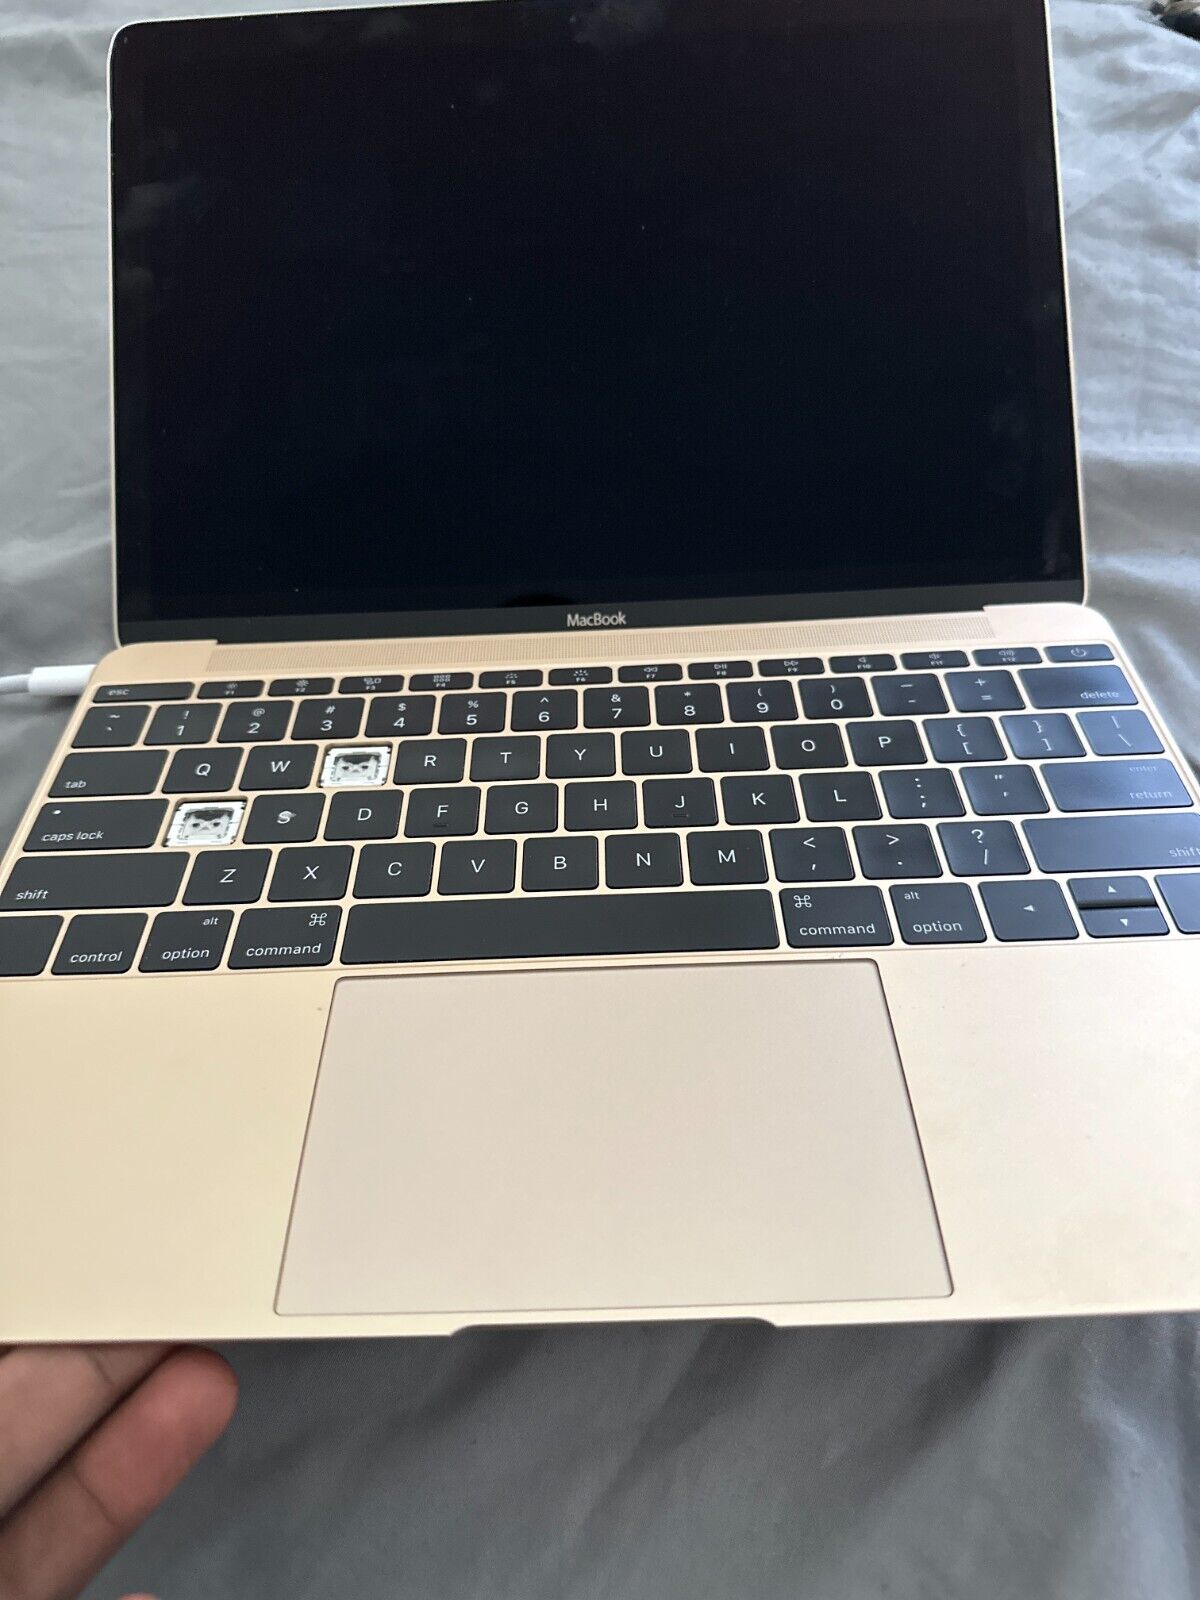 Apple MacBook 12 inch Laptop - MLHE2LL/A (2016, Gold)